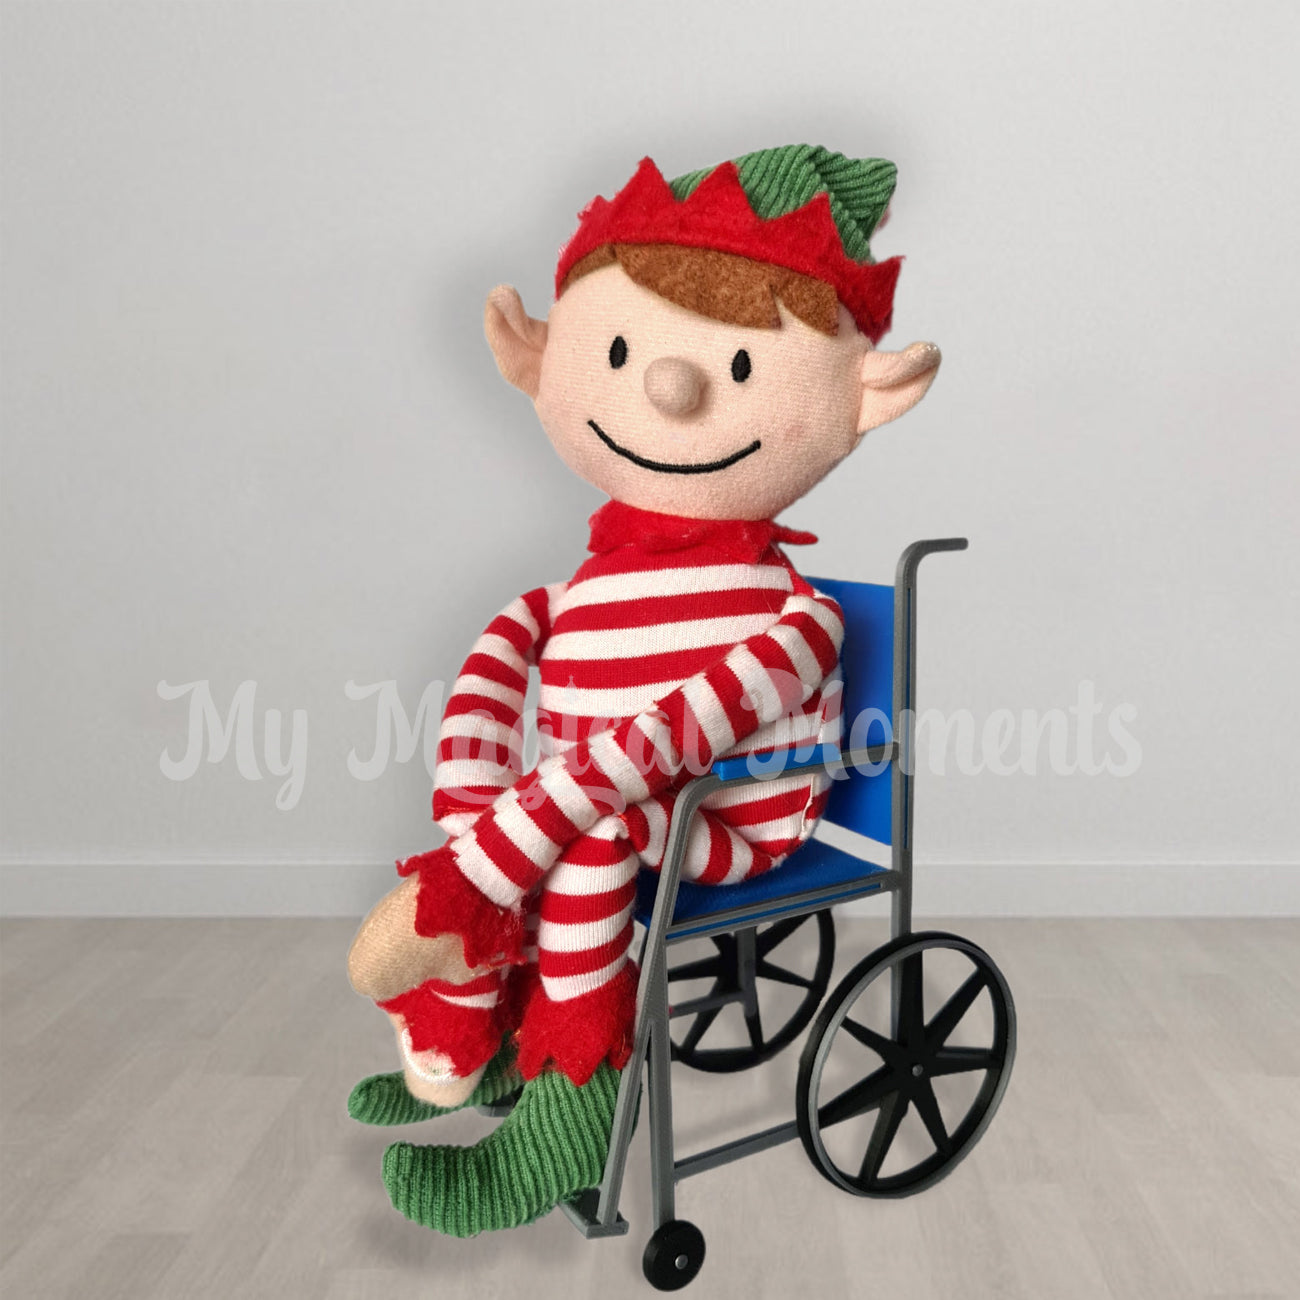 An elf for christmas in a blue miniature wheelchair